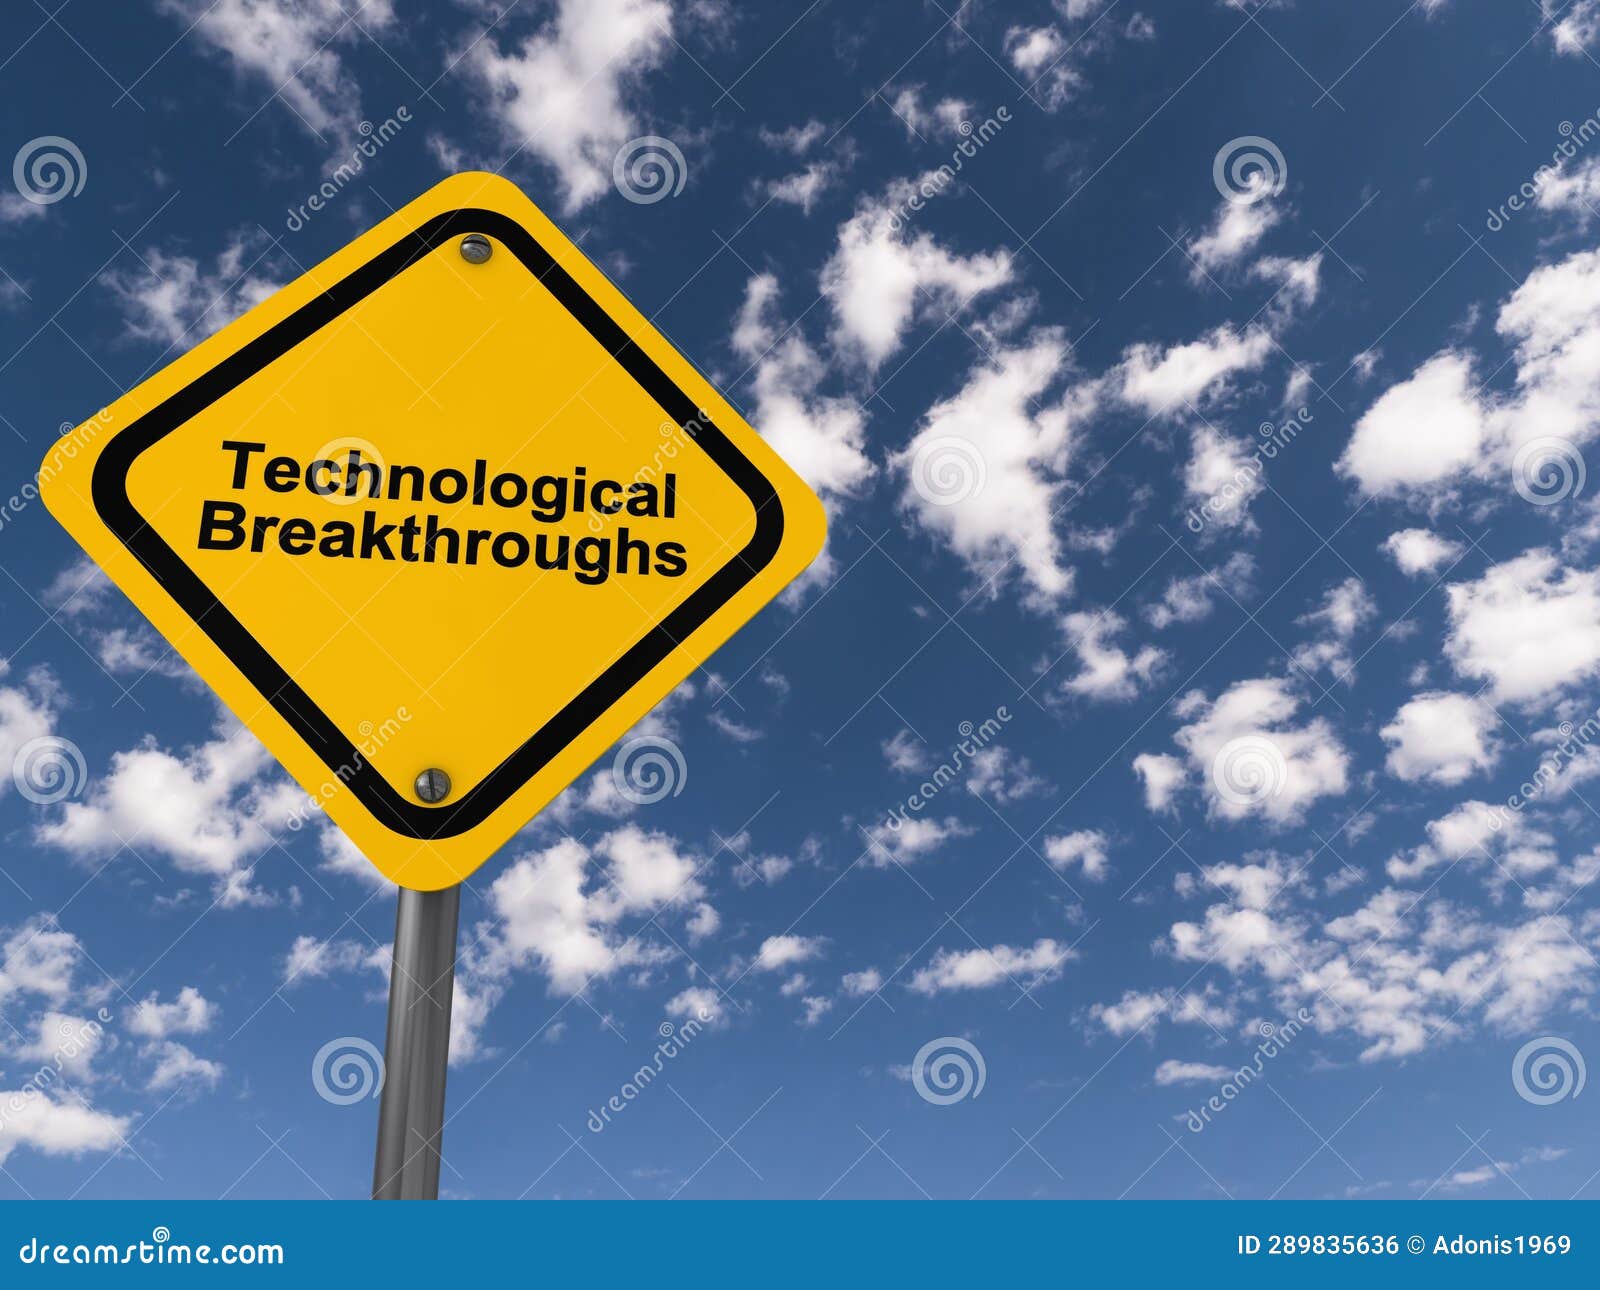 technological breakthroughs traffic sign on blue sky